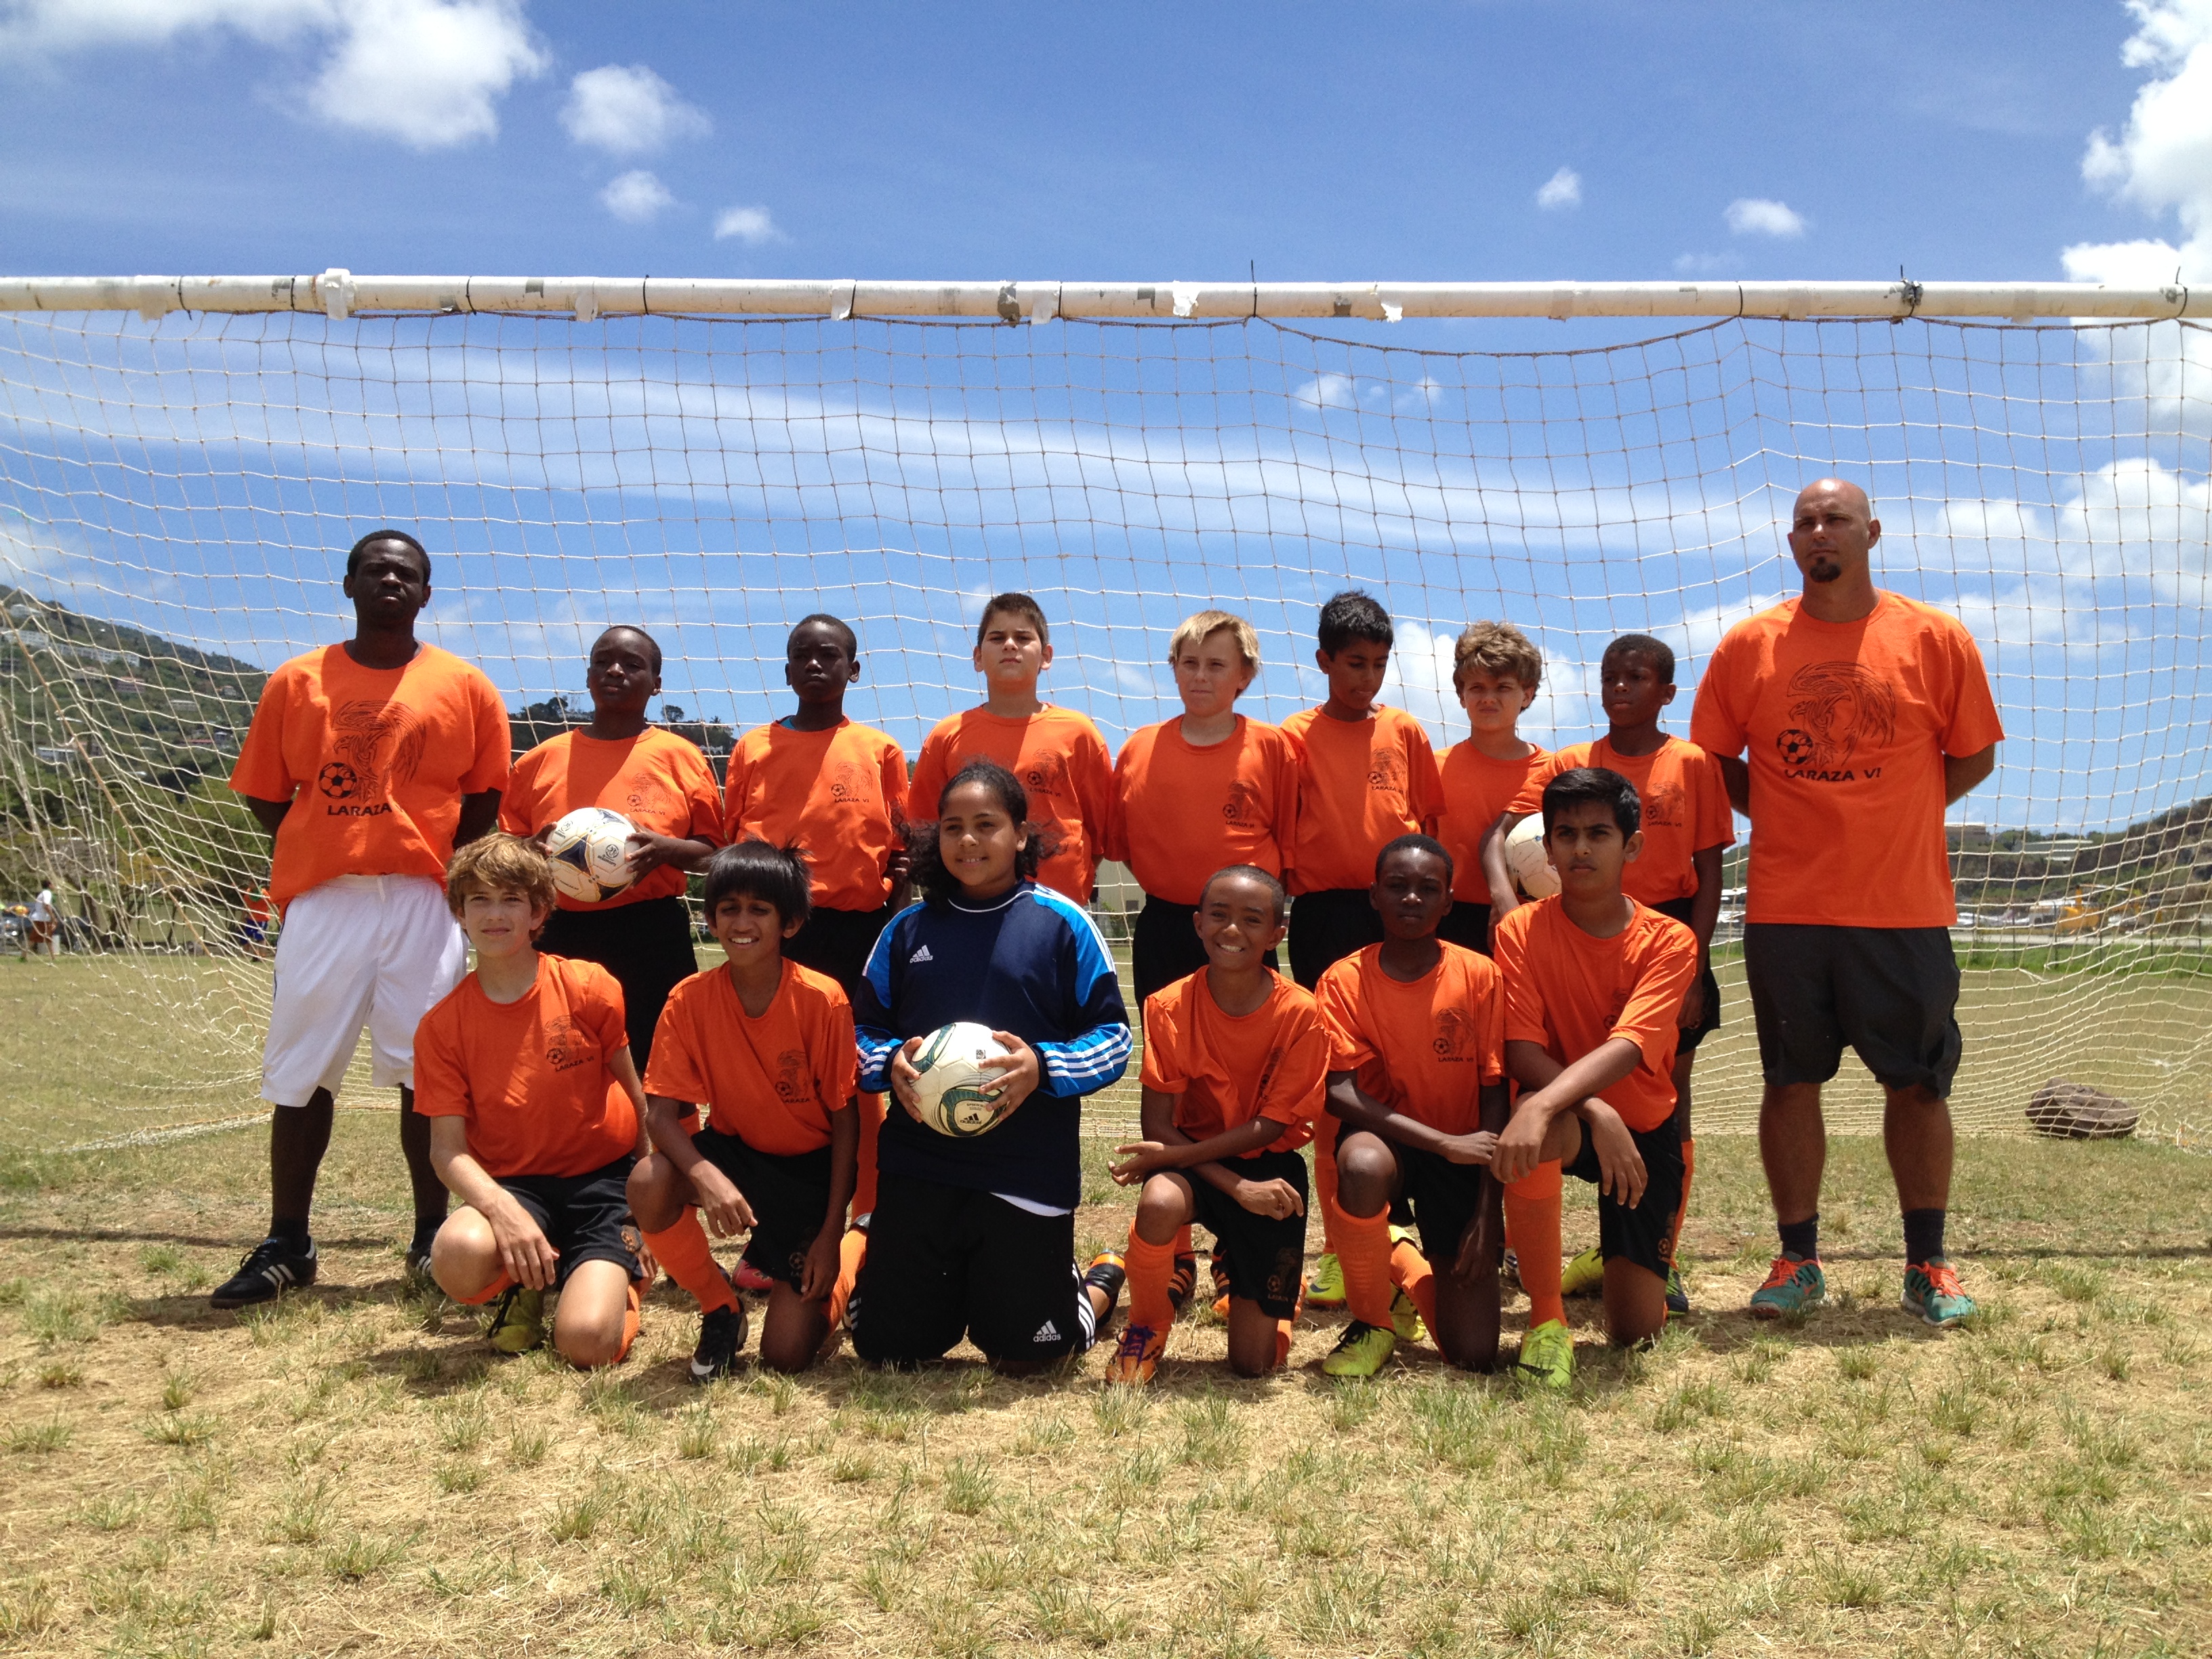 LaRaza VI Soccer Team Travels to Compete in St. Martin